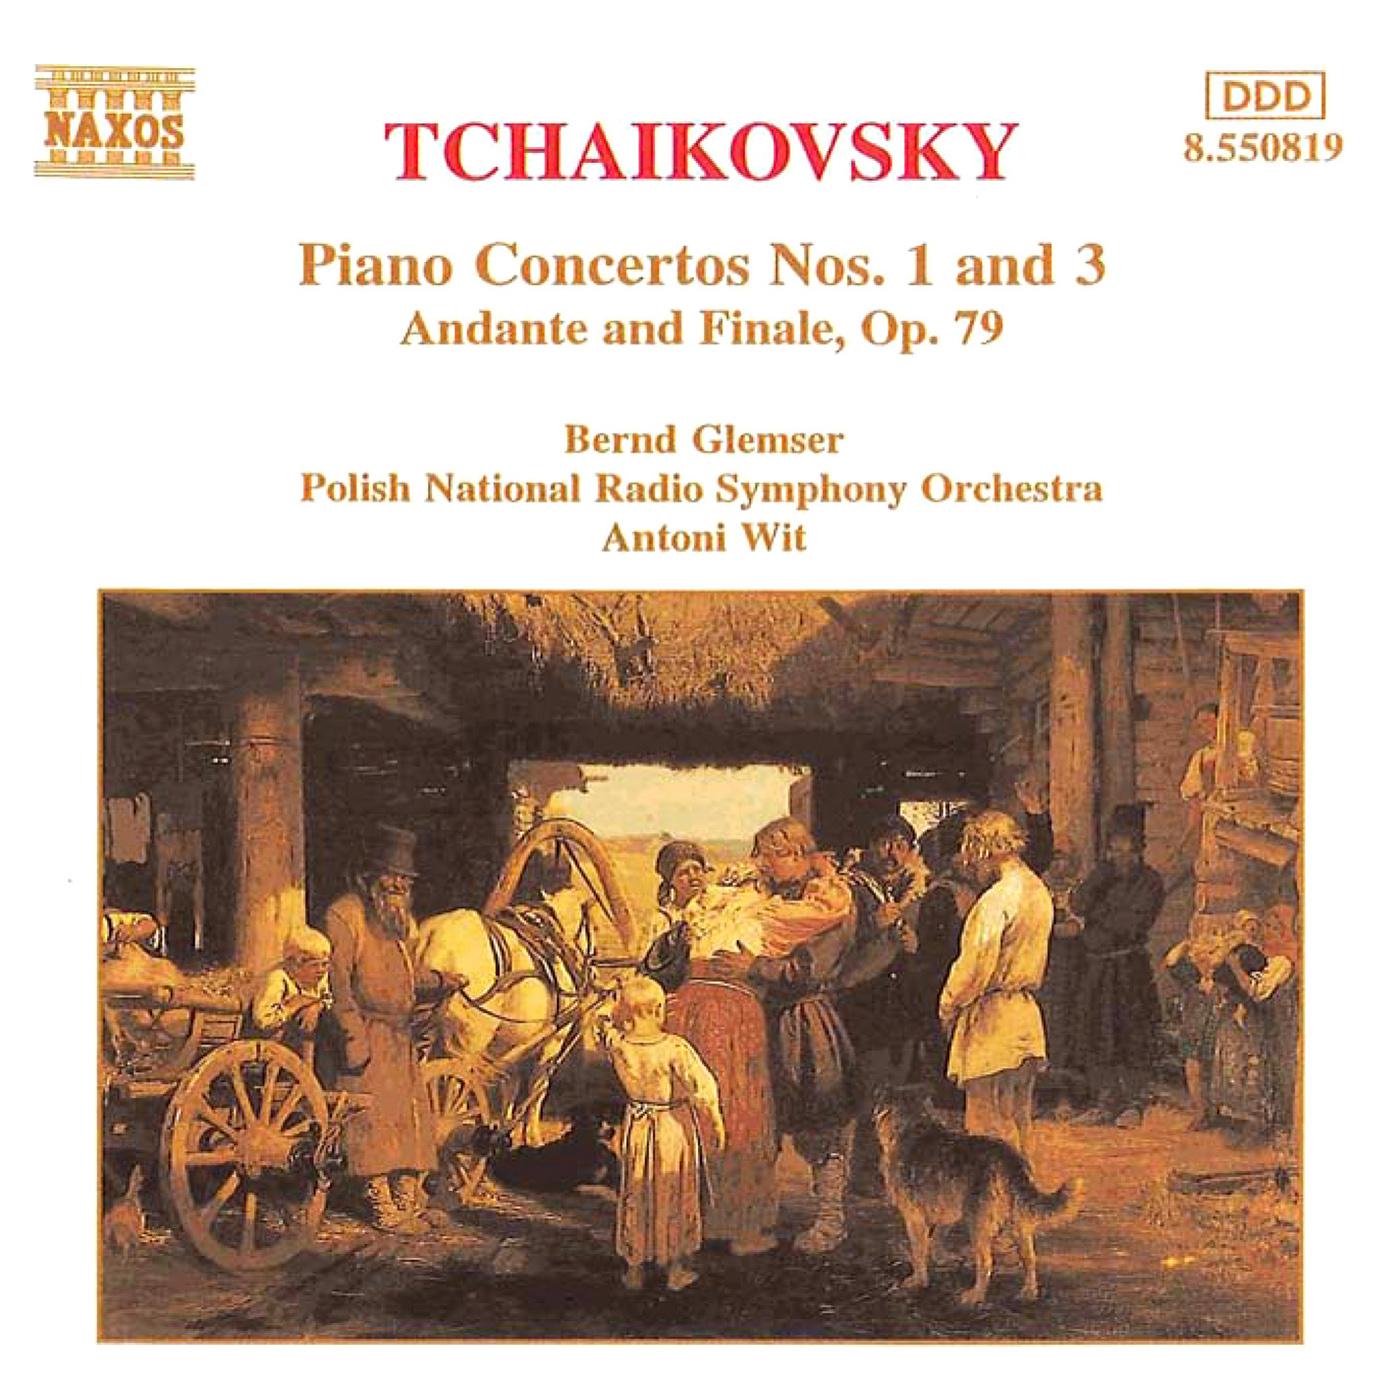 Piano Concerto No. 3 in E-Flat Major, Op. 75